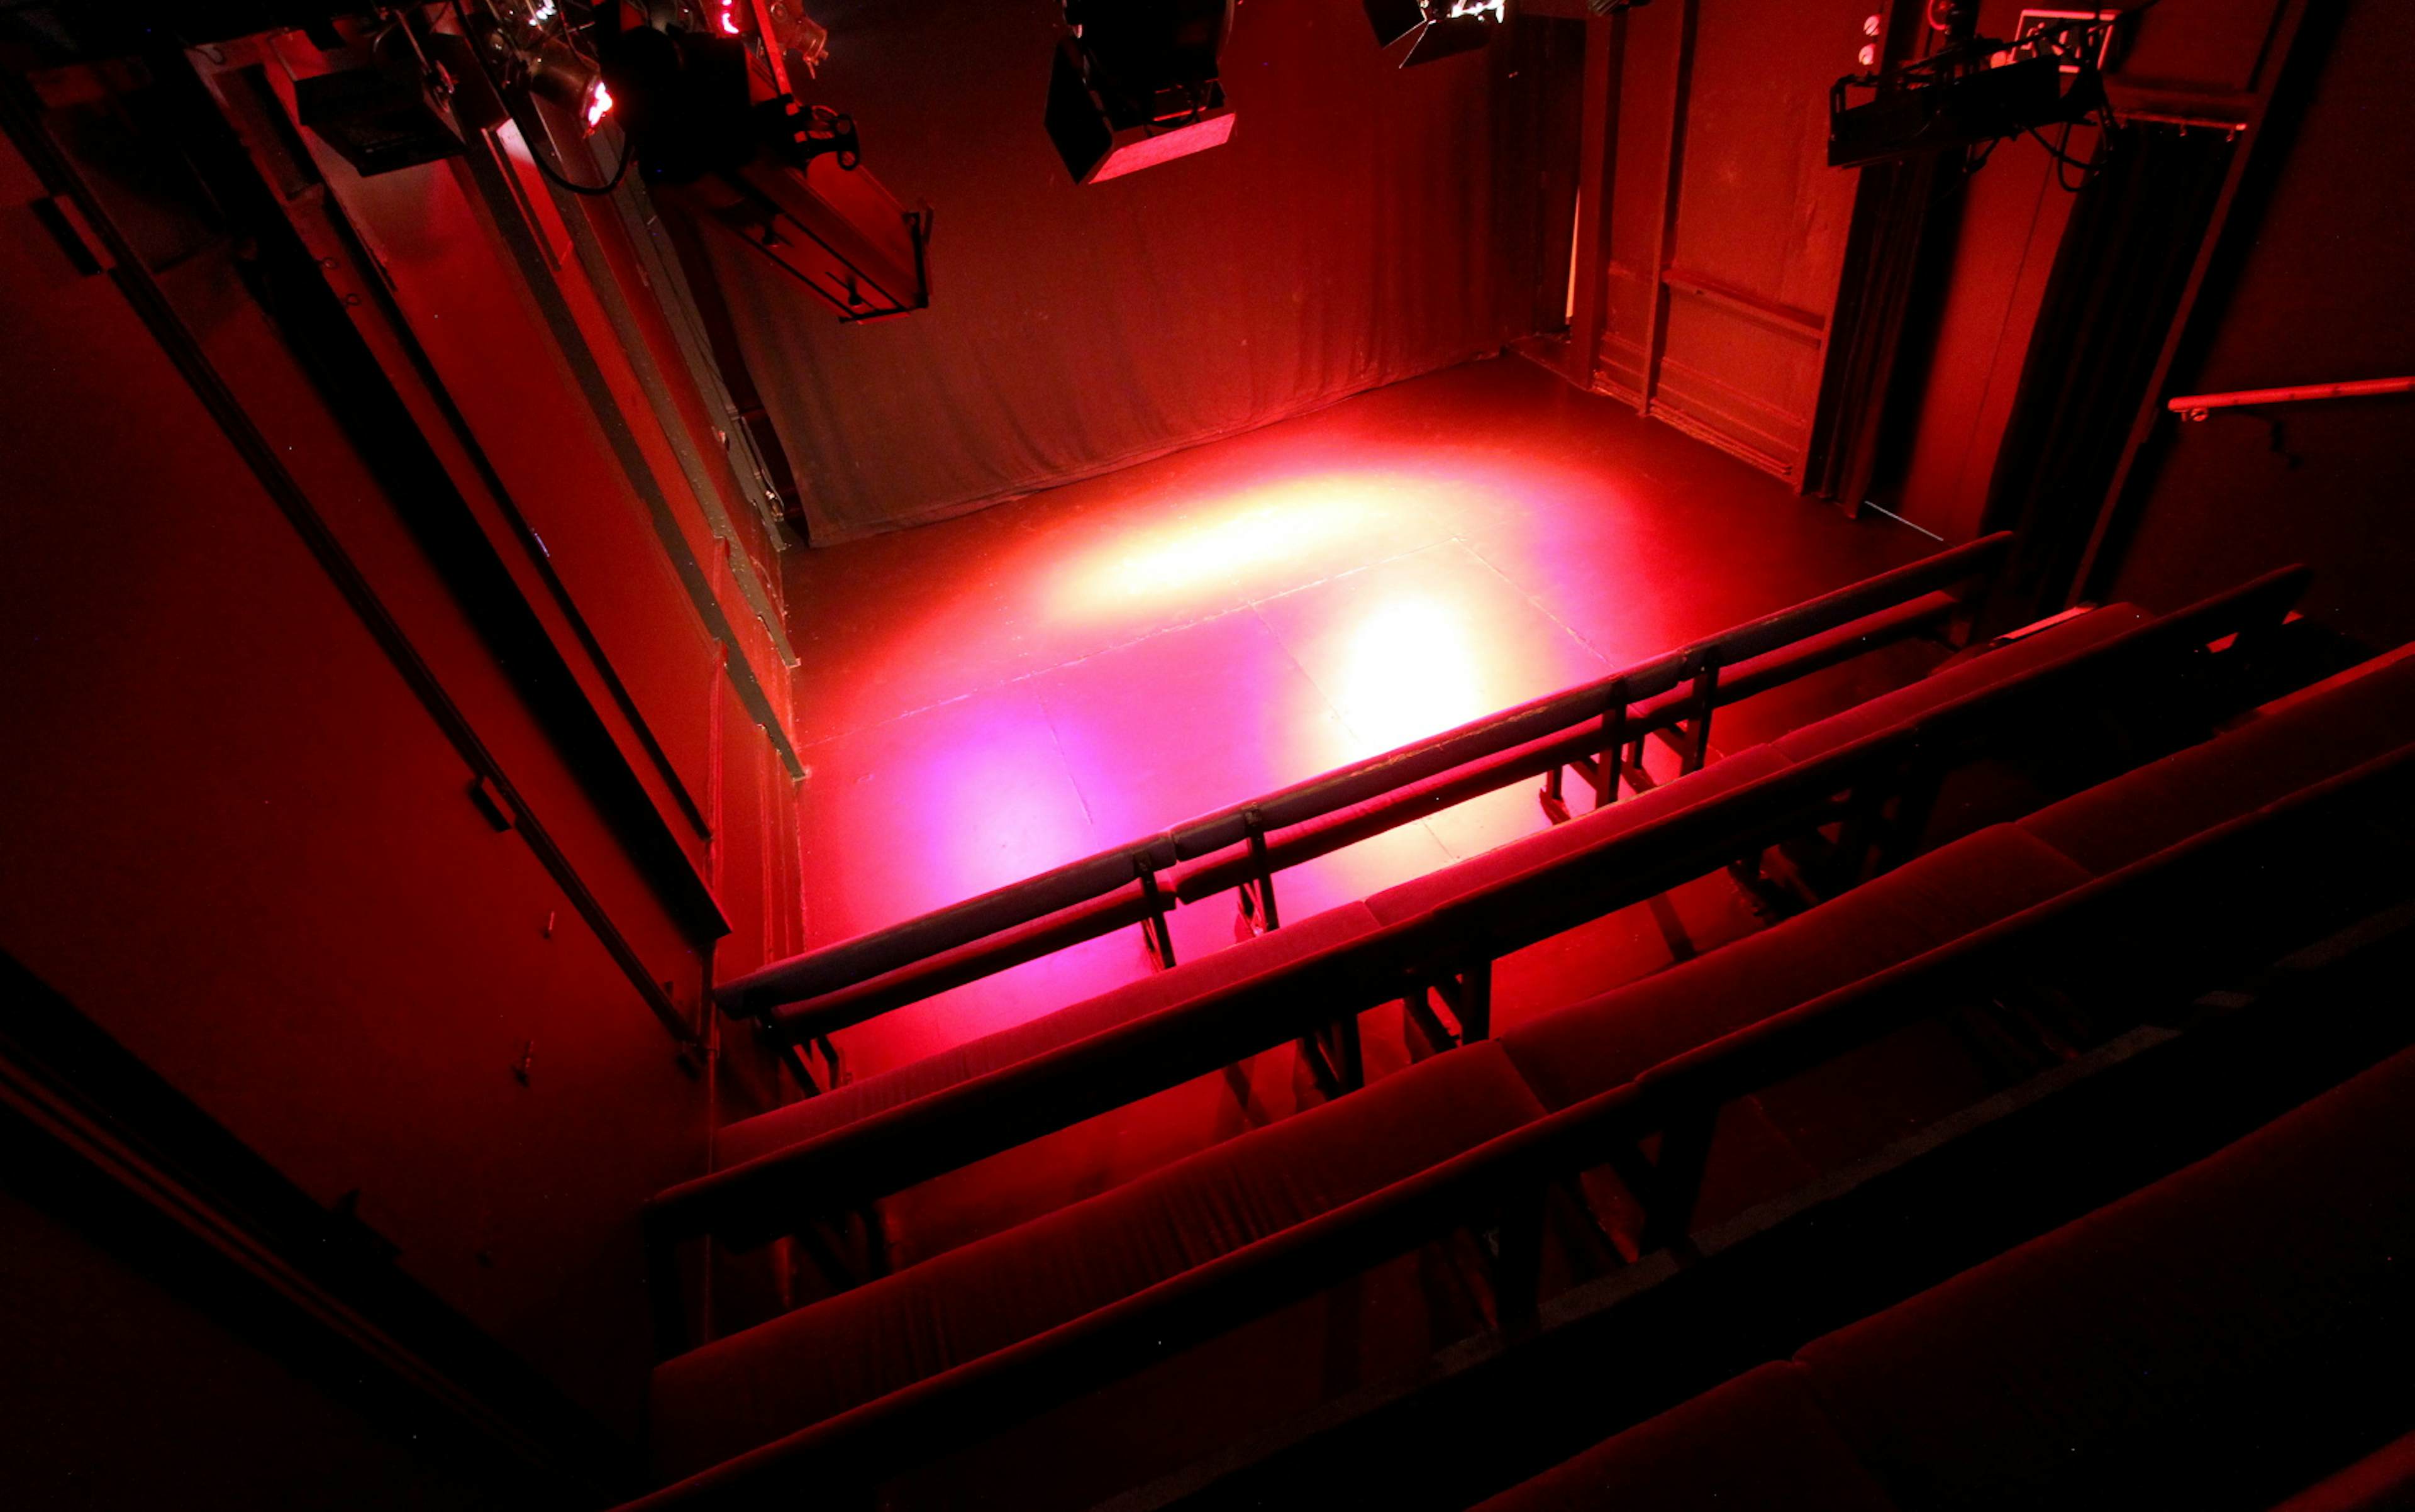 The Etcetera Theatre - Black Box Theatre image 1